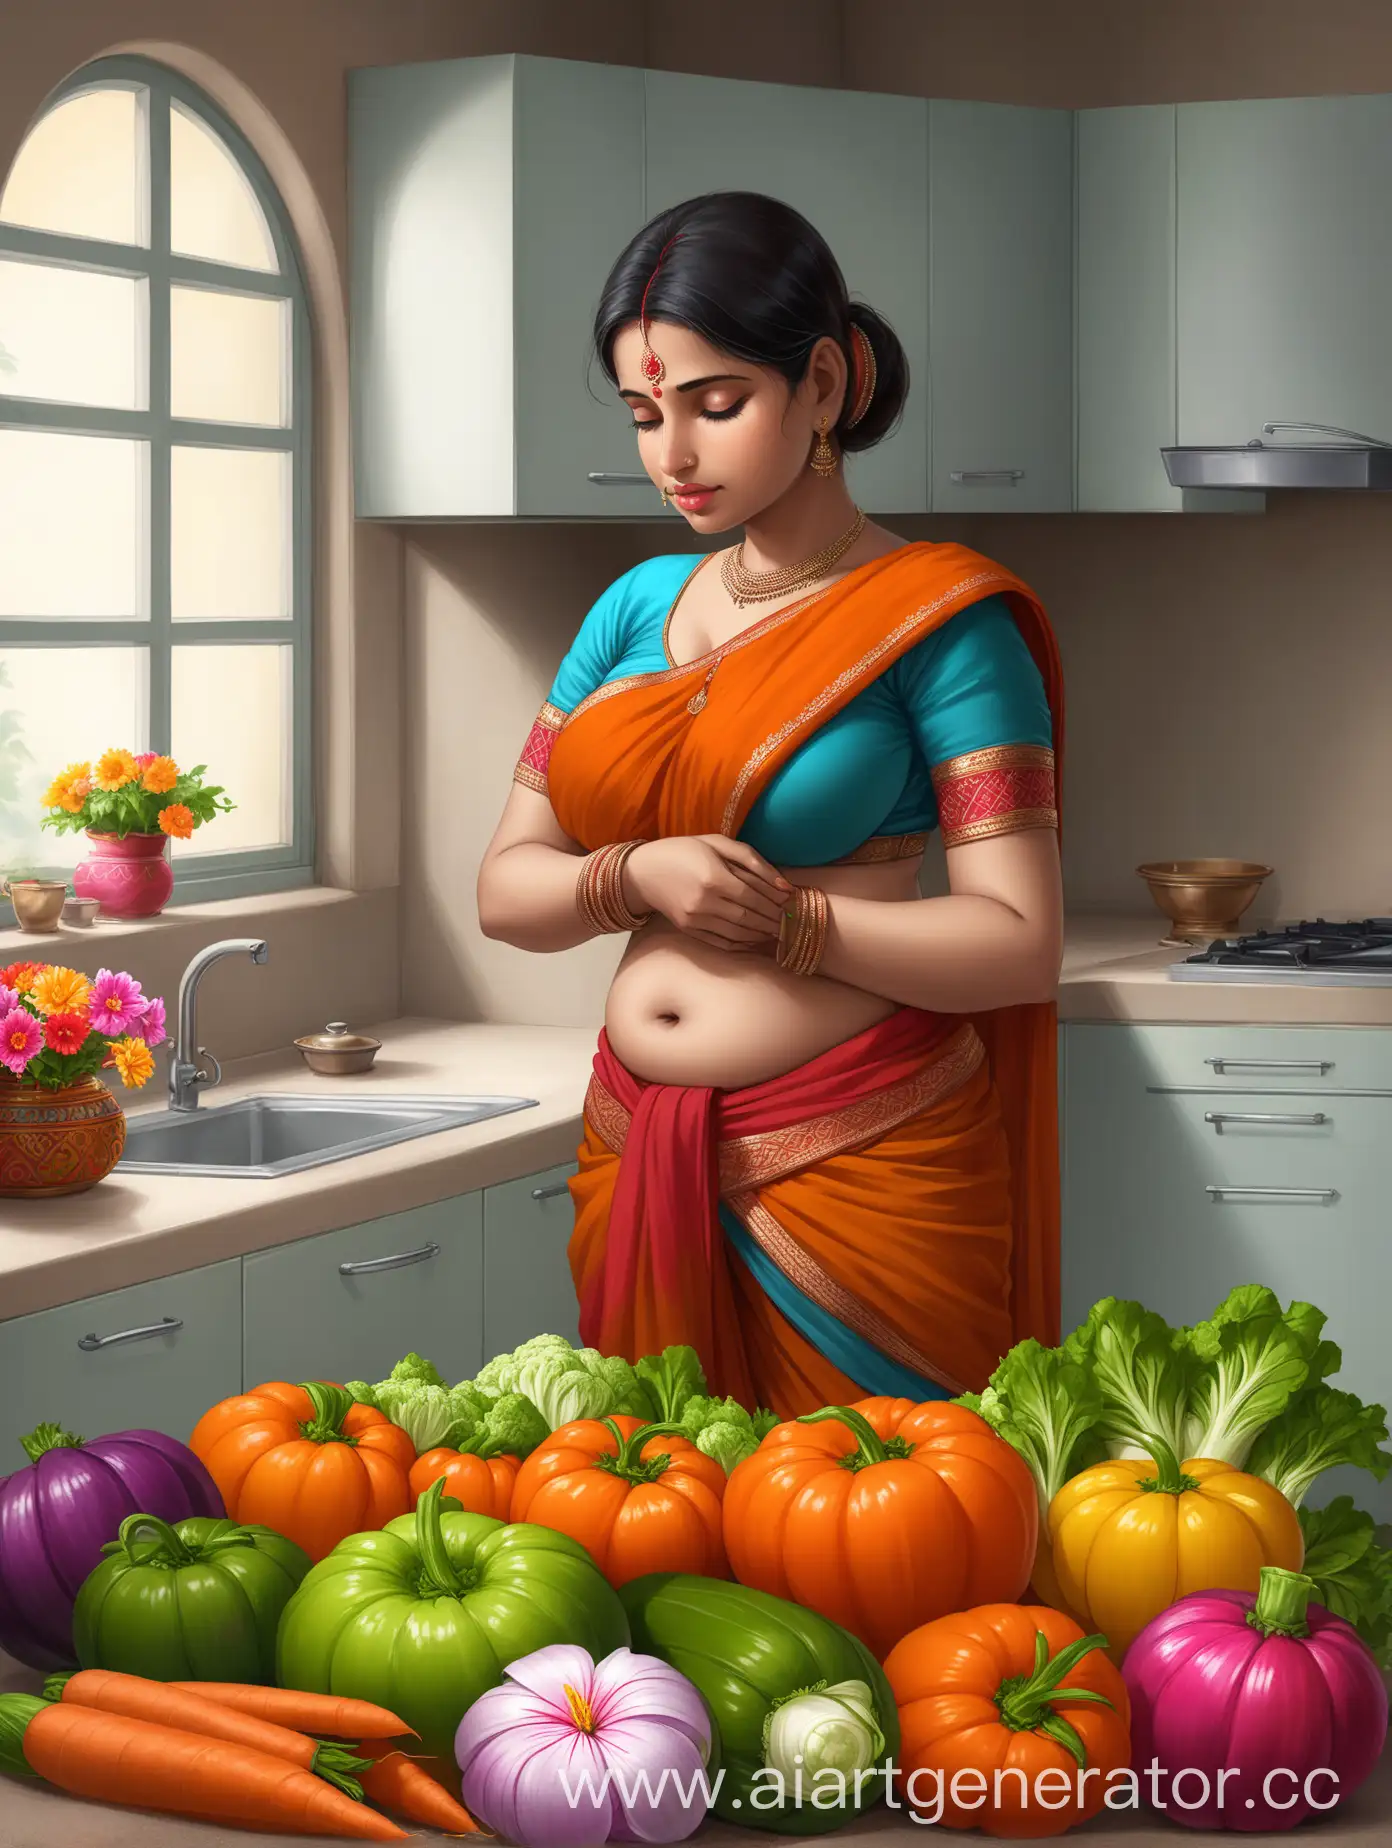 Indian-Housewife-Preparing-Vibrant-Vegetables-in-Blooming-Kitchen-Garden